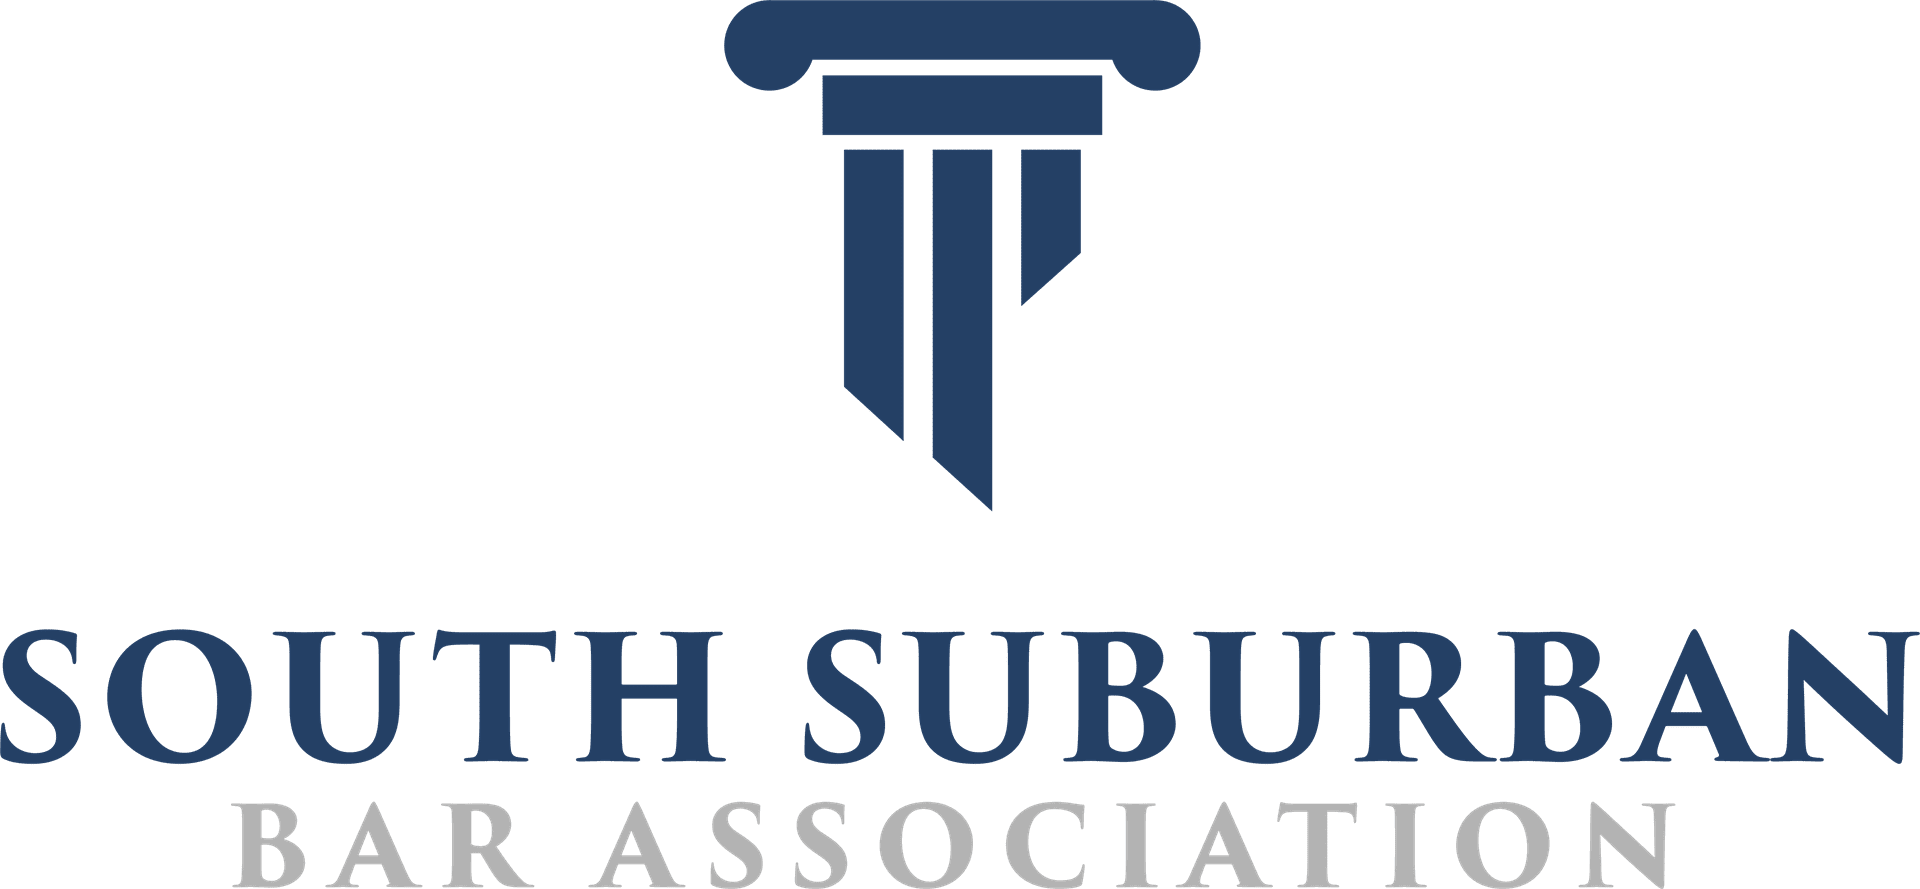 South Suburban Bar Association logo